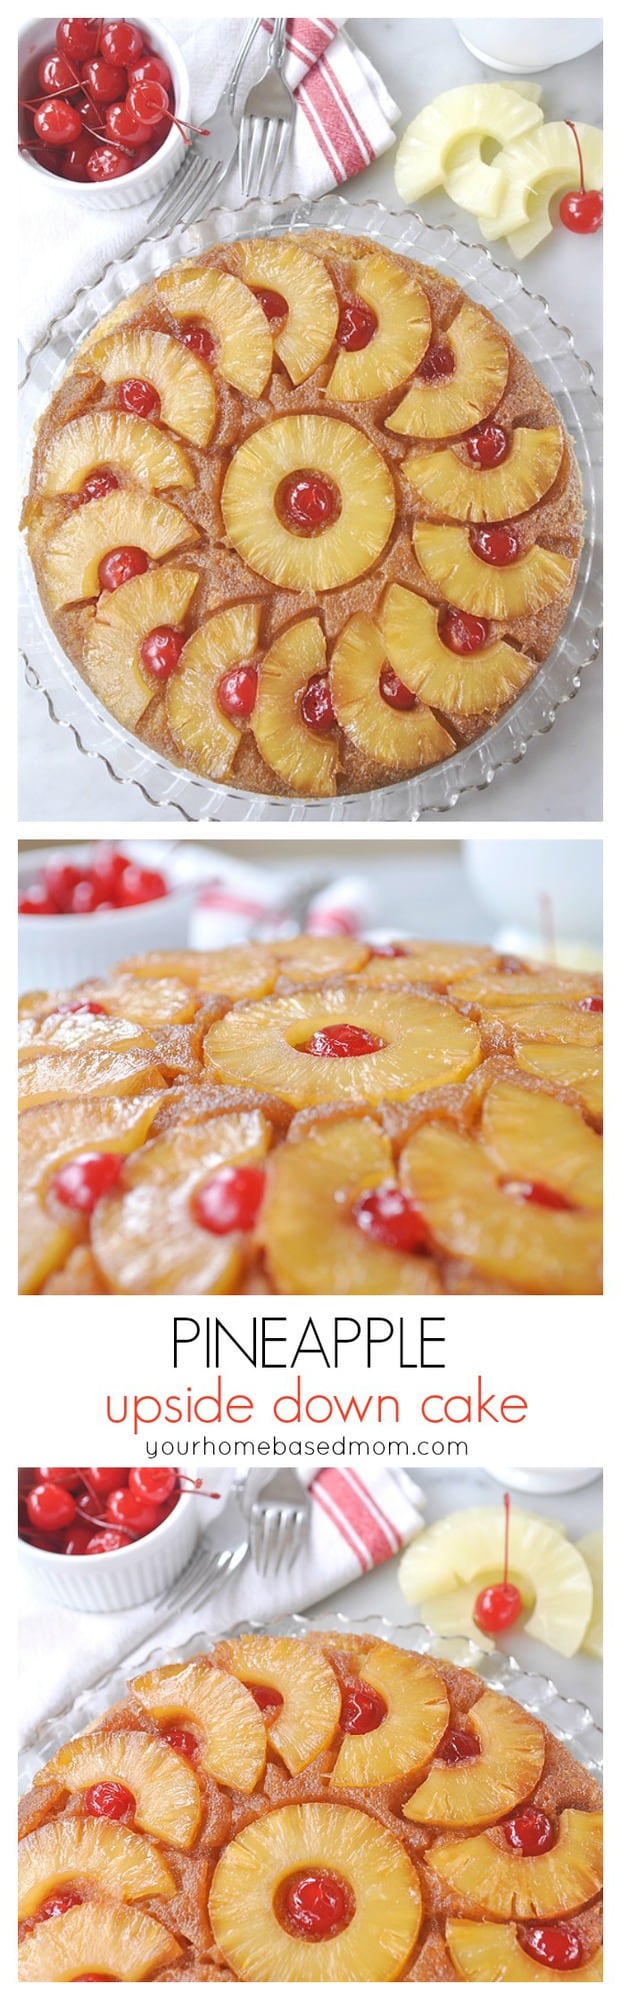 Pineapple Upside Down Cake - a family favorite @yourhomebasedmom.com